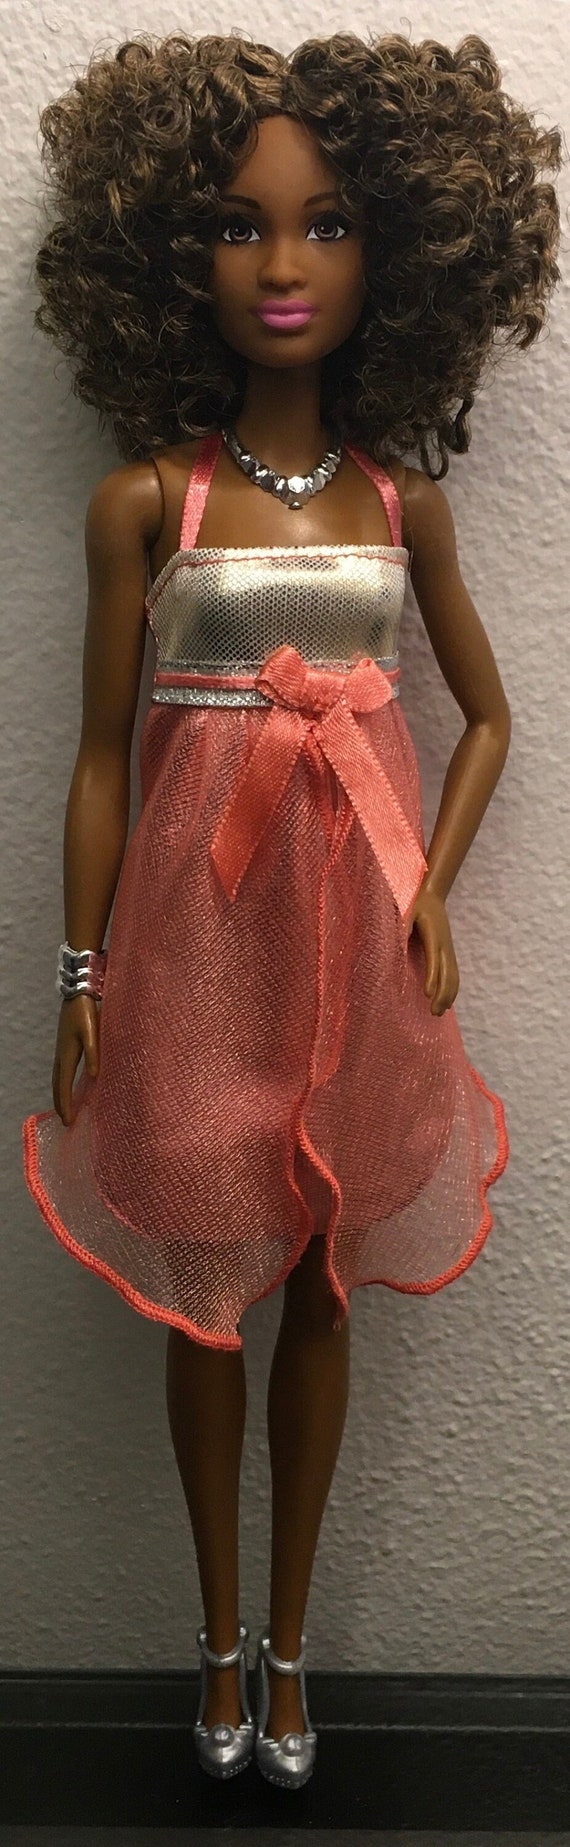 Barbie  28inch Best Fashion Friend Doll  Black Hair  JP61022  Toys  4You Store